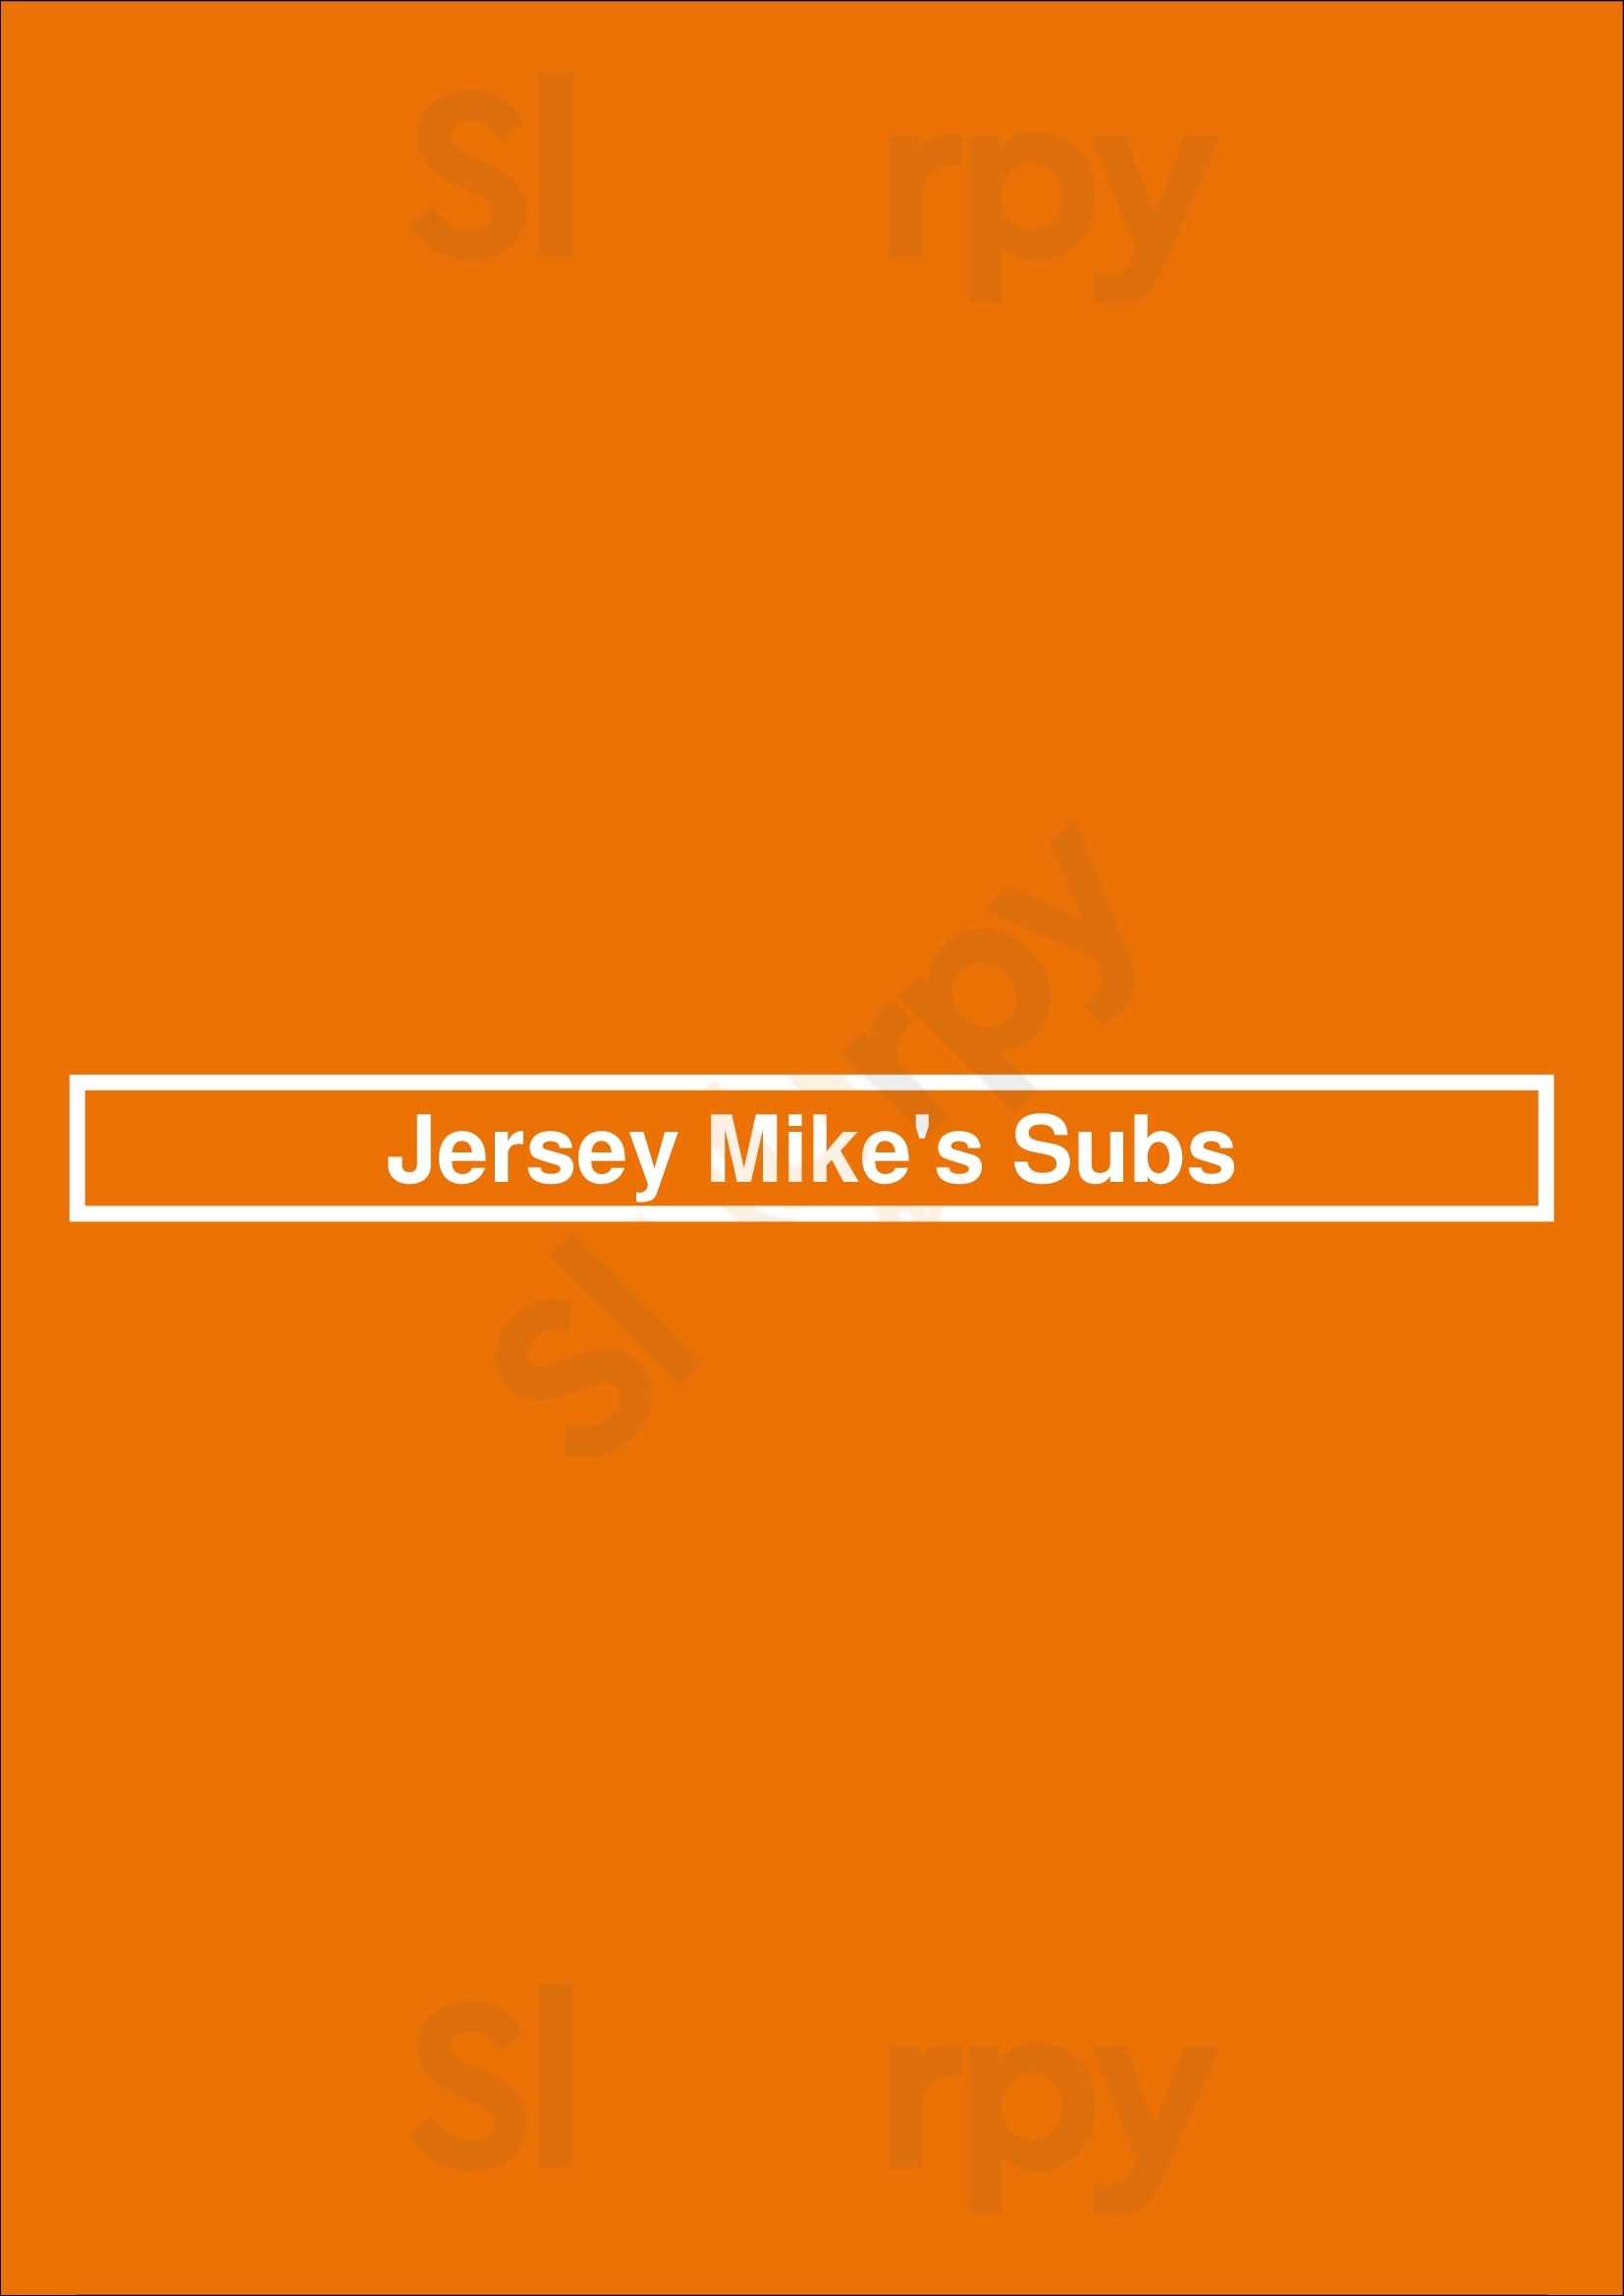 Jersey Mike's Subs Dallas Menu - 1